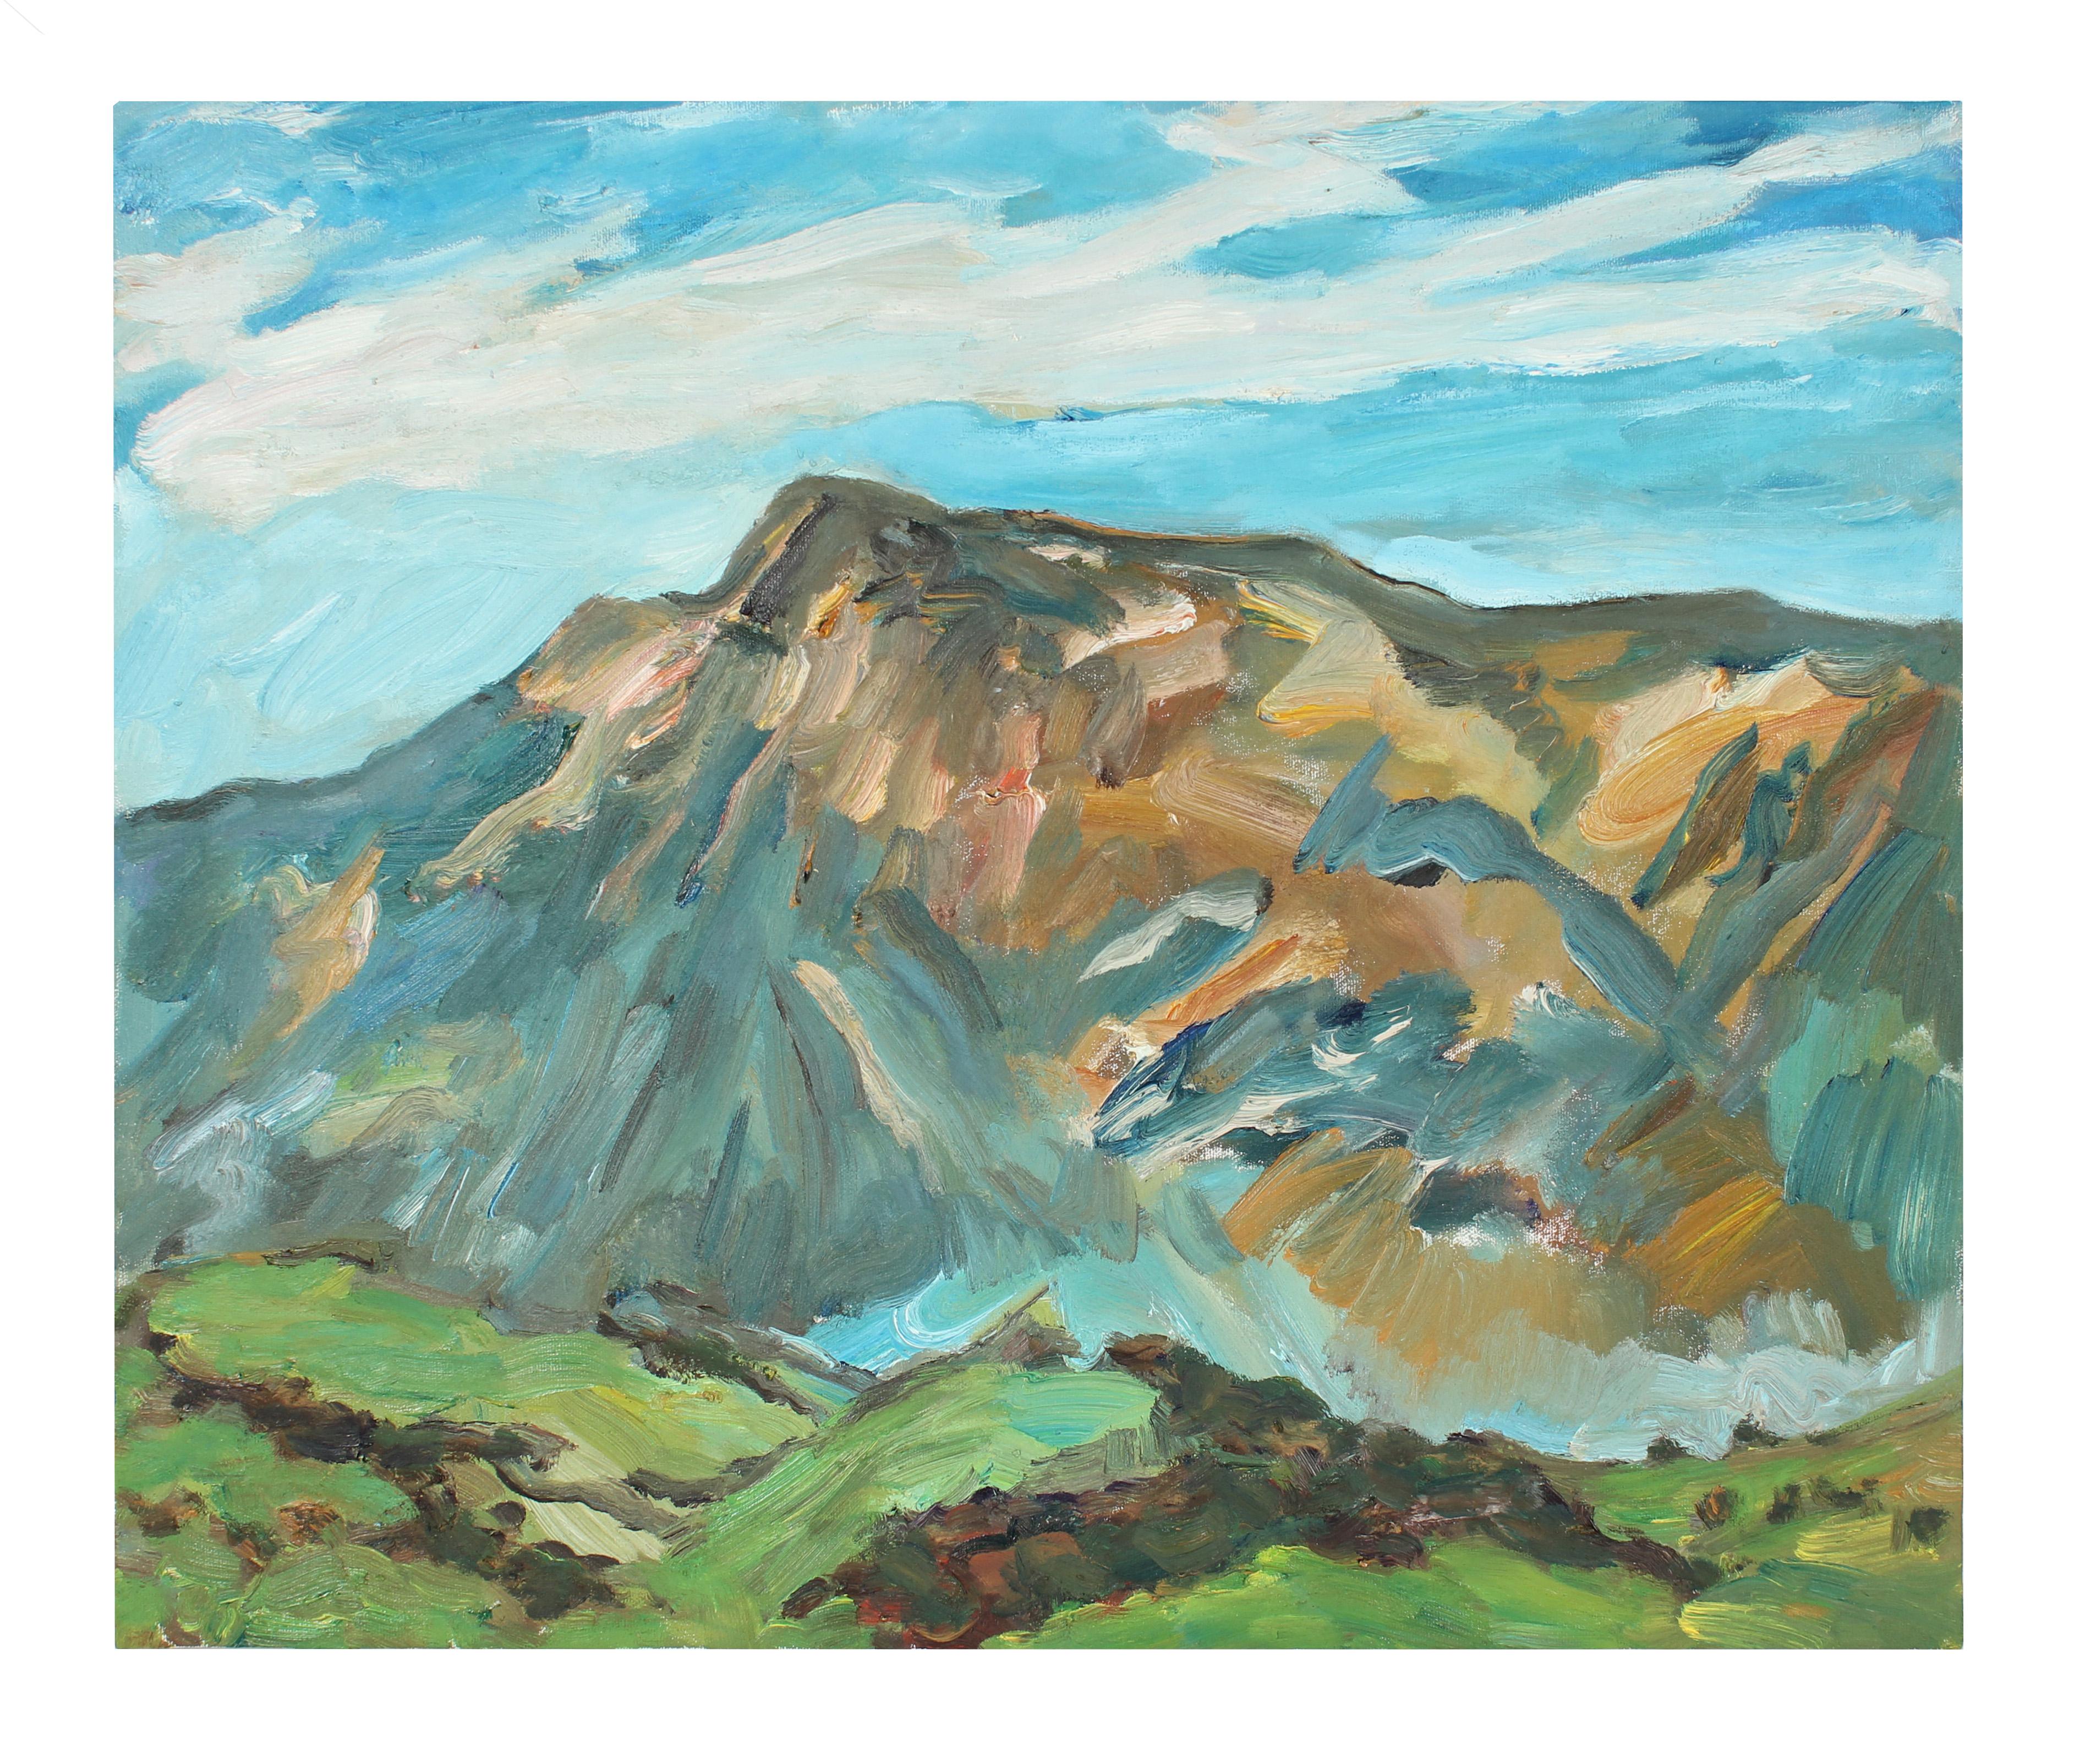 Jack Freeman Landscape Painting - "Mt. St. Helens" Late Twentieth Century Oil on Canvas Landscape 